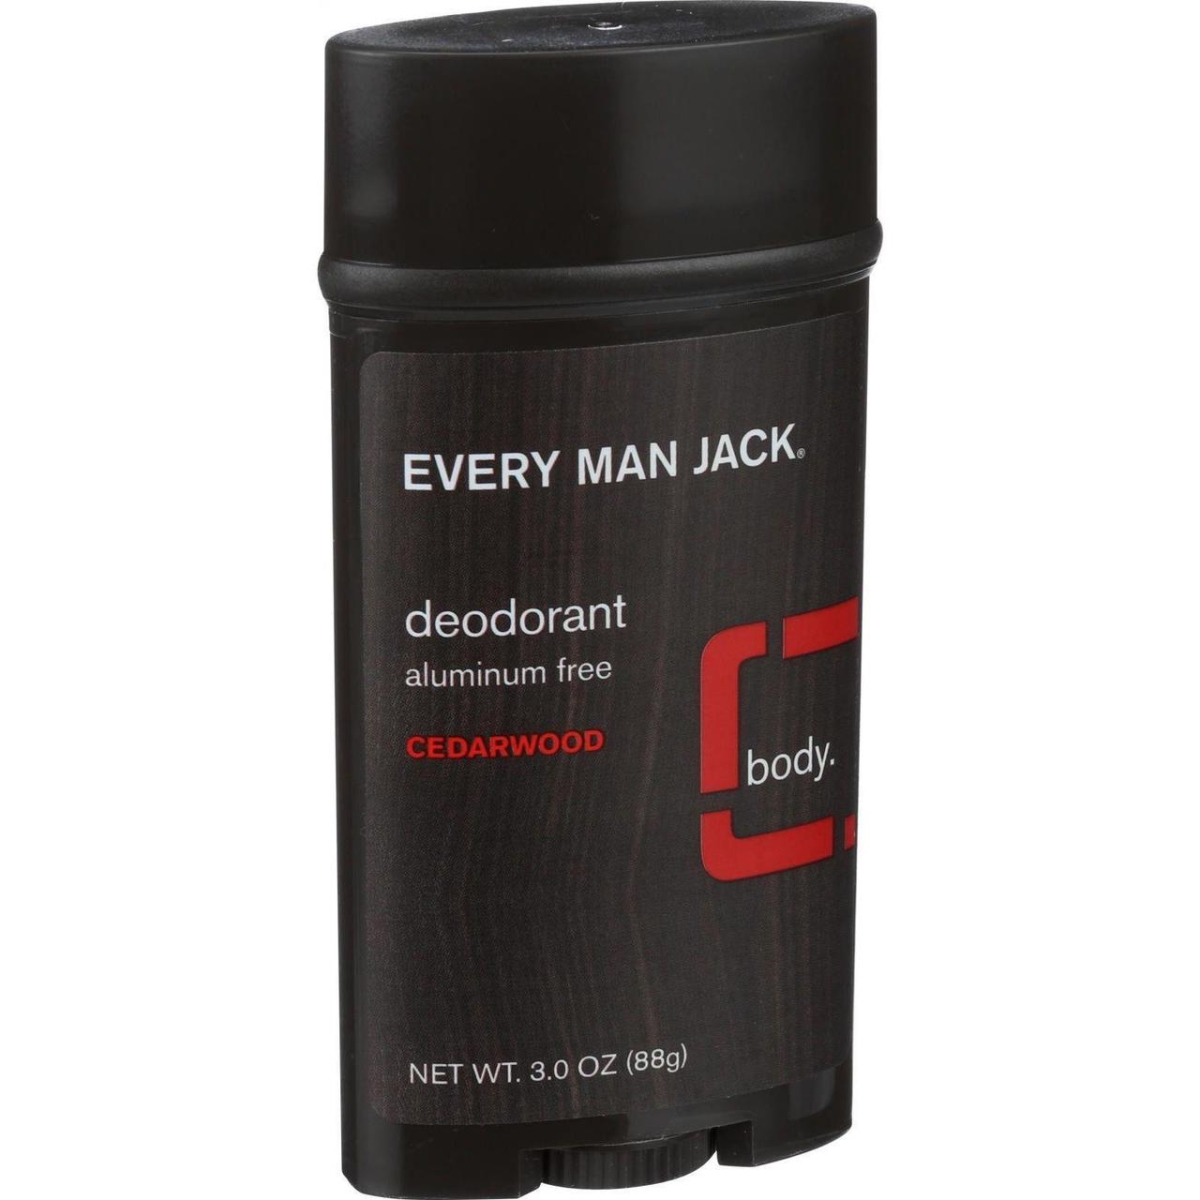 Picture of Every Man Jack HG0689539 3 oz Aluminum Free Body Deodorant, Cedarwood